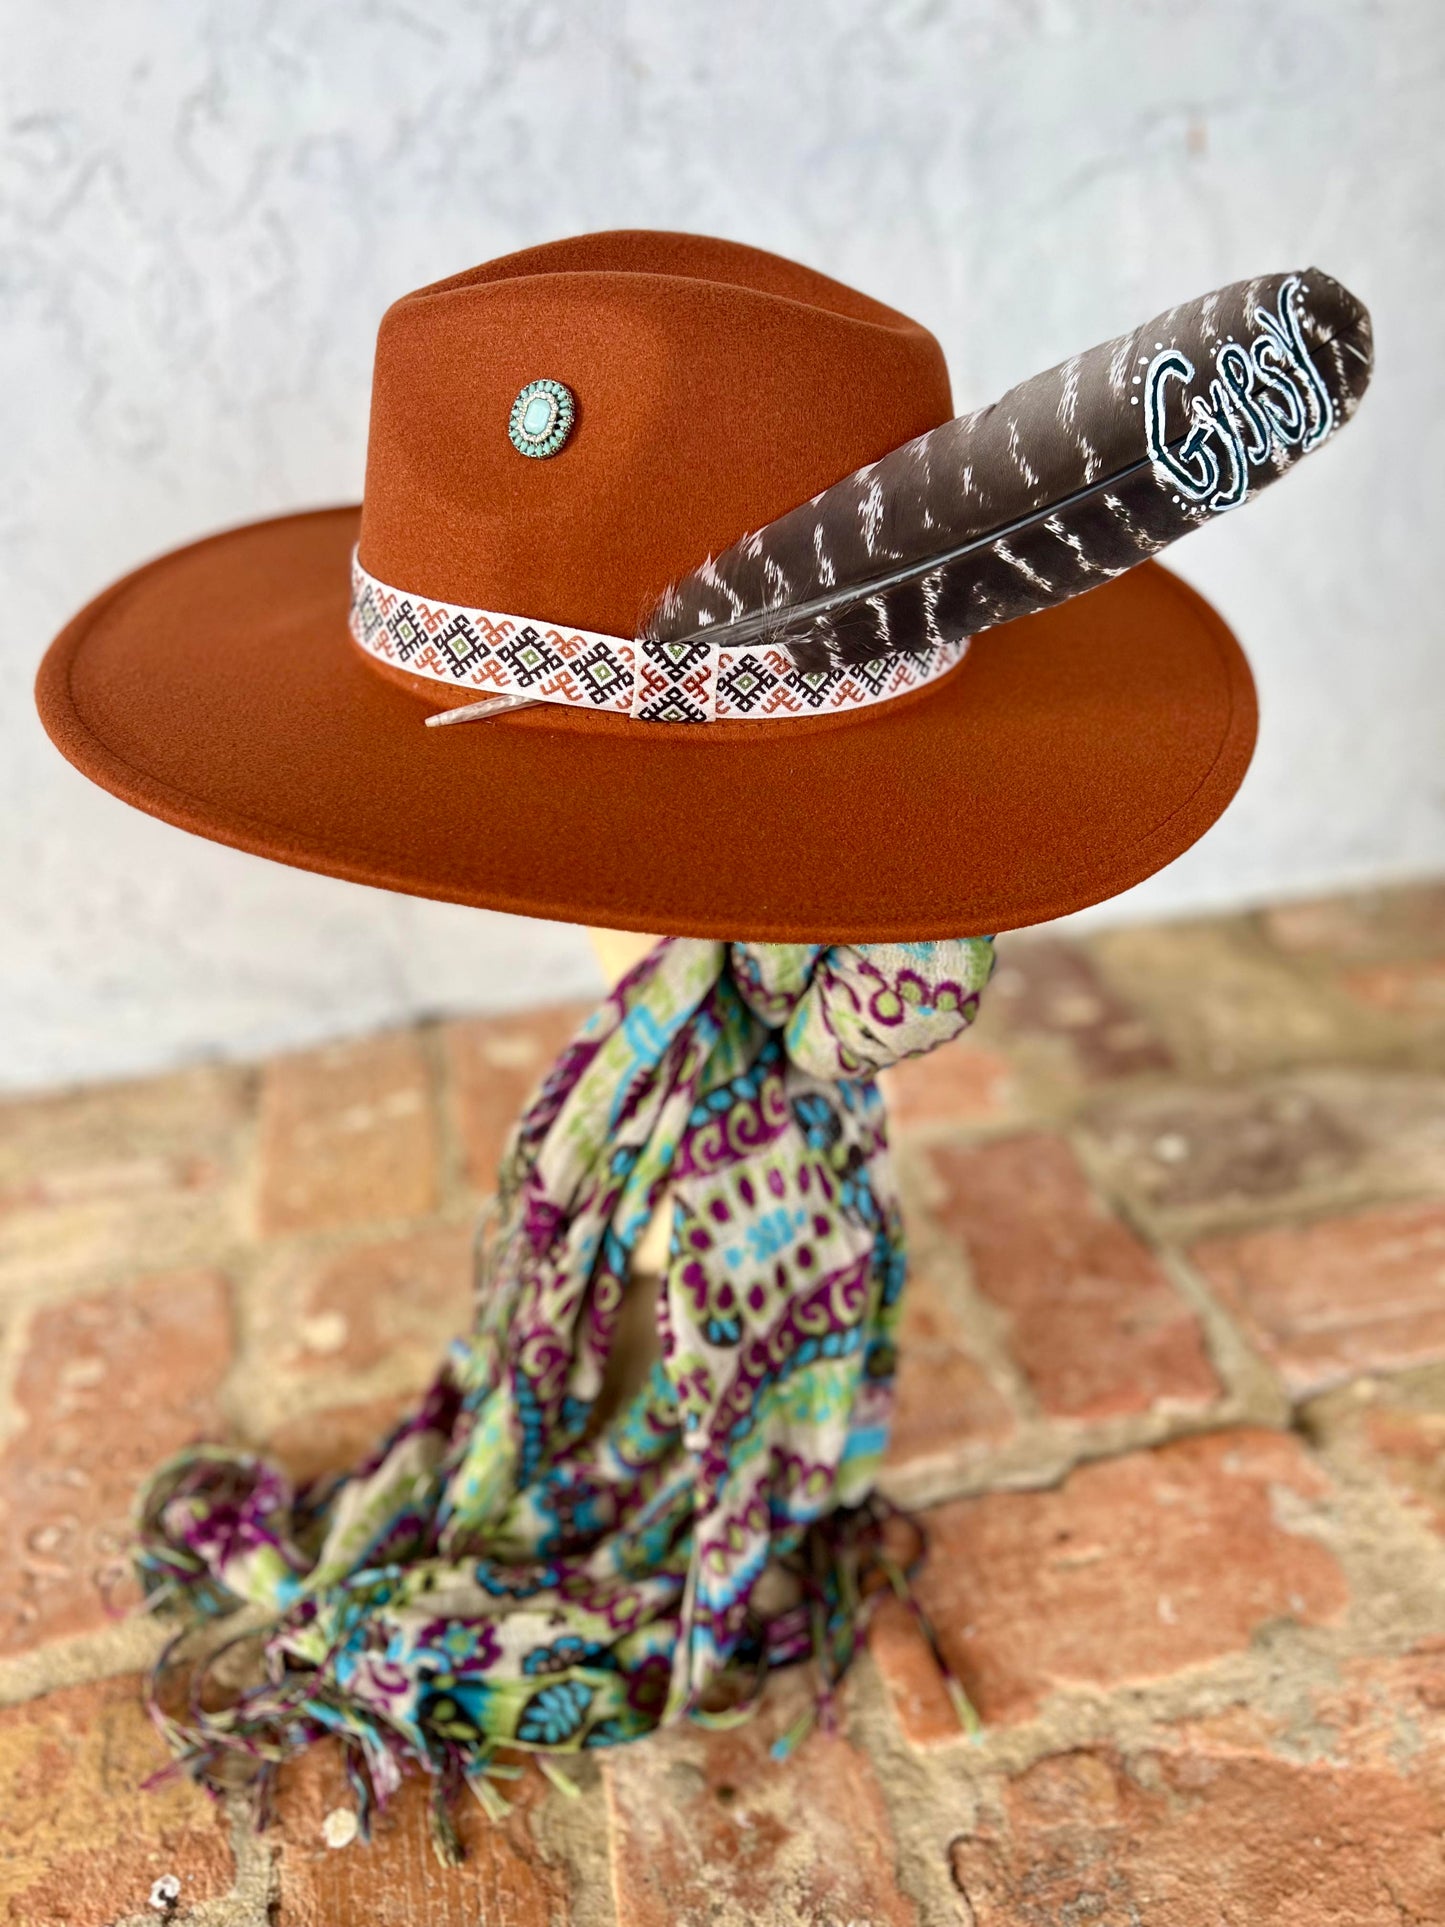 The Gypsy Hat